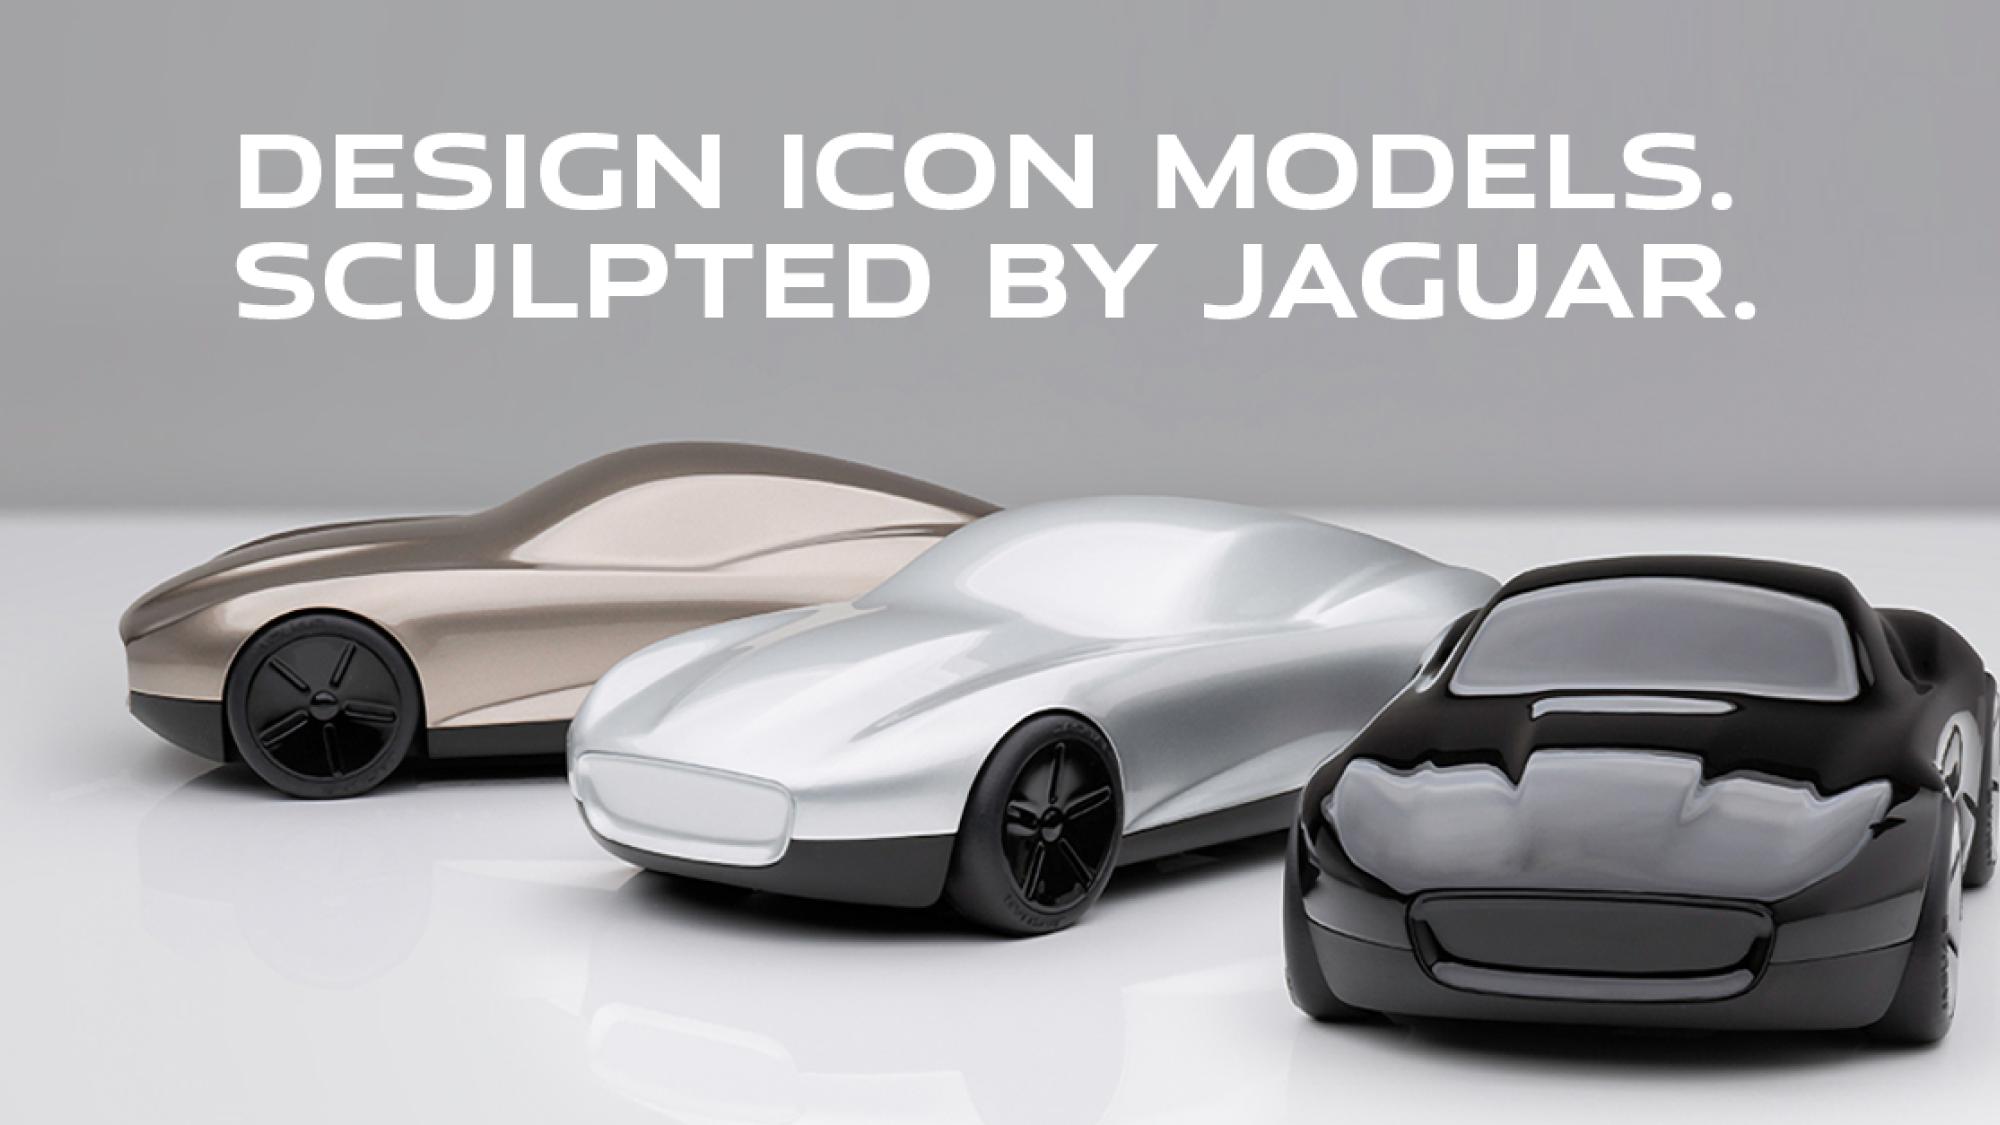 Design Icon Models